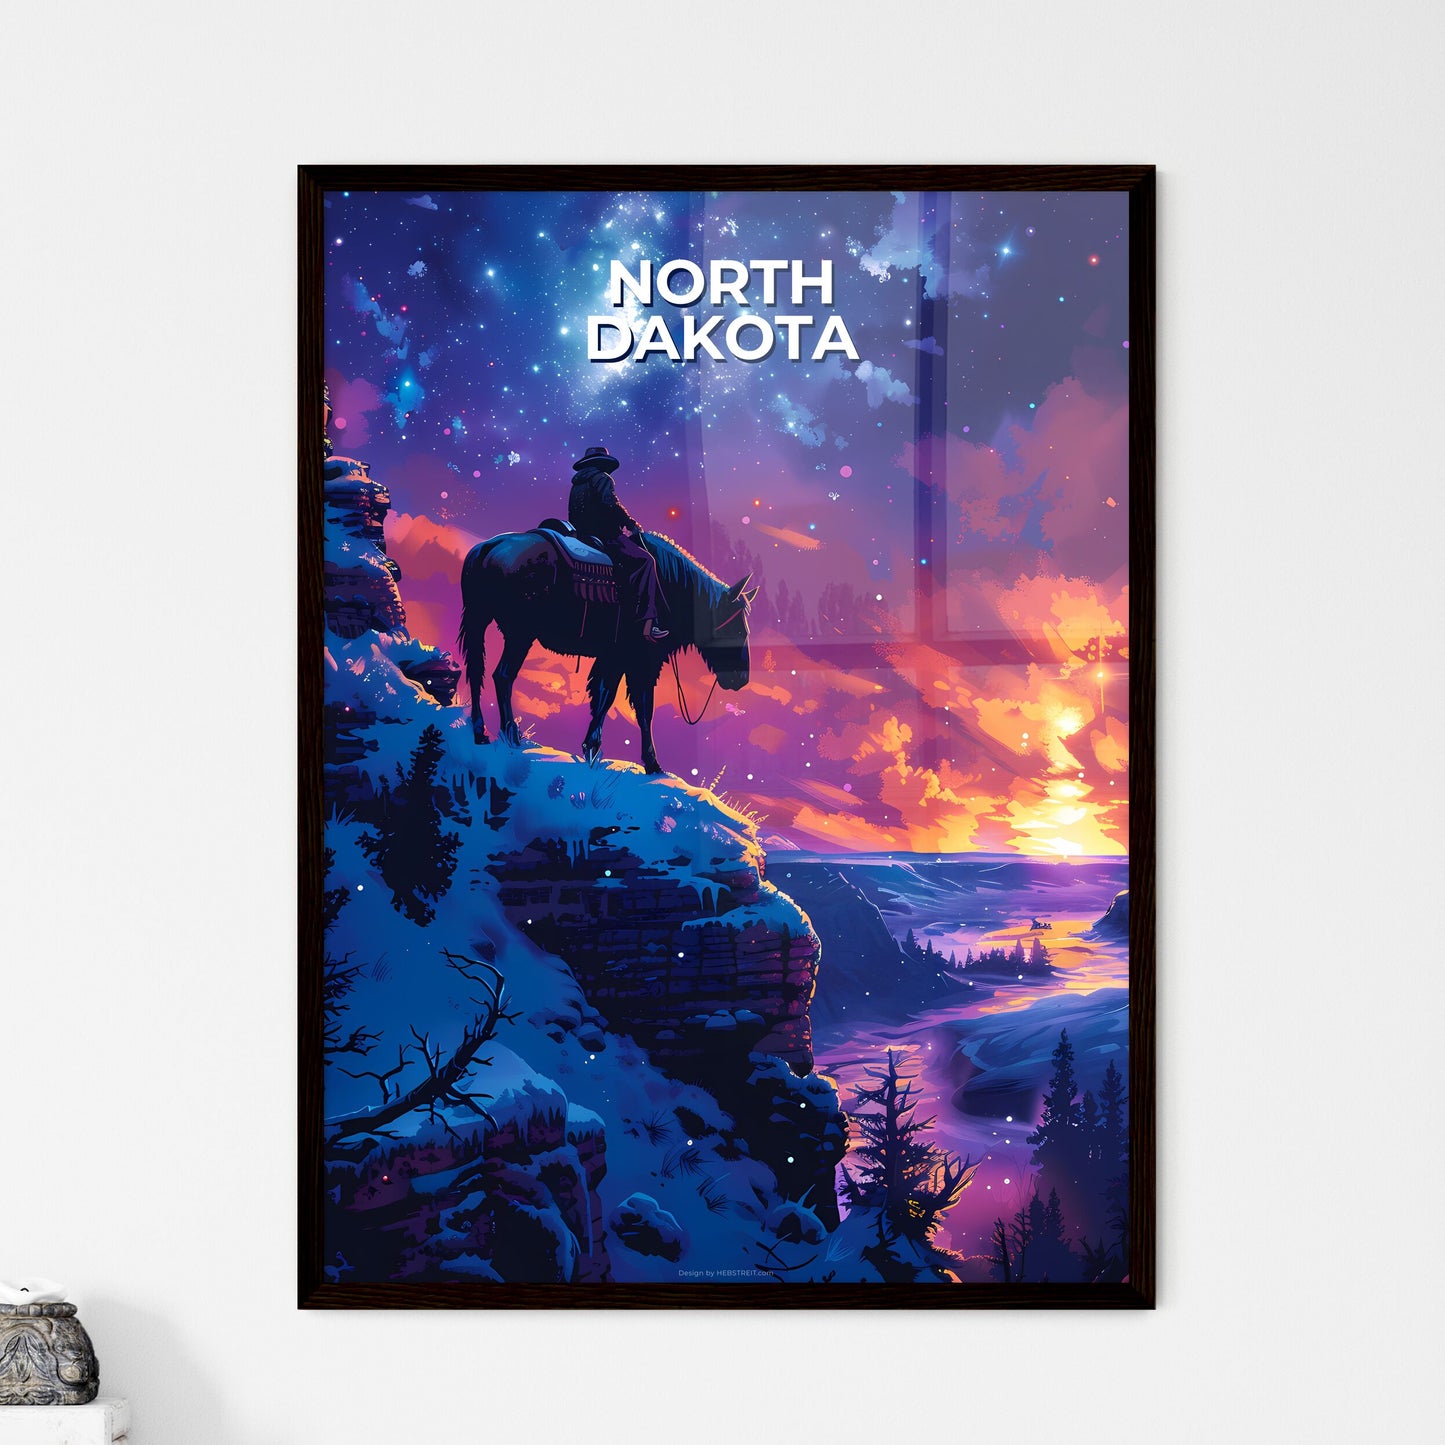 Vibrant Equestrian Art: Person on Horse Admiring Sunset in North Dakota, USA